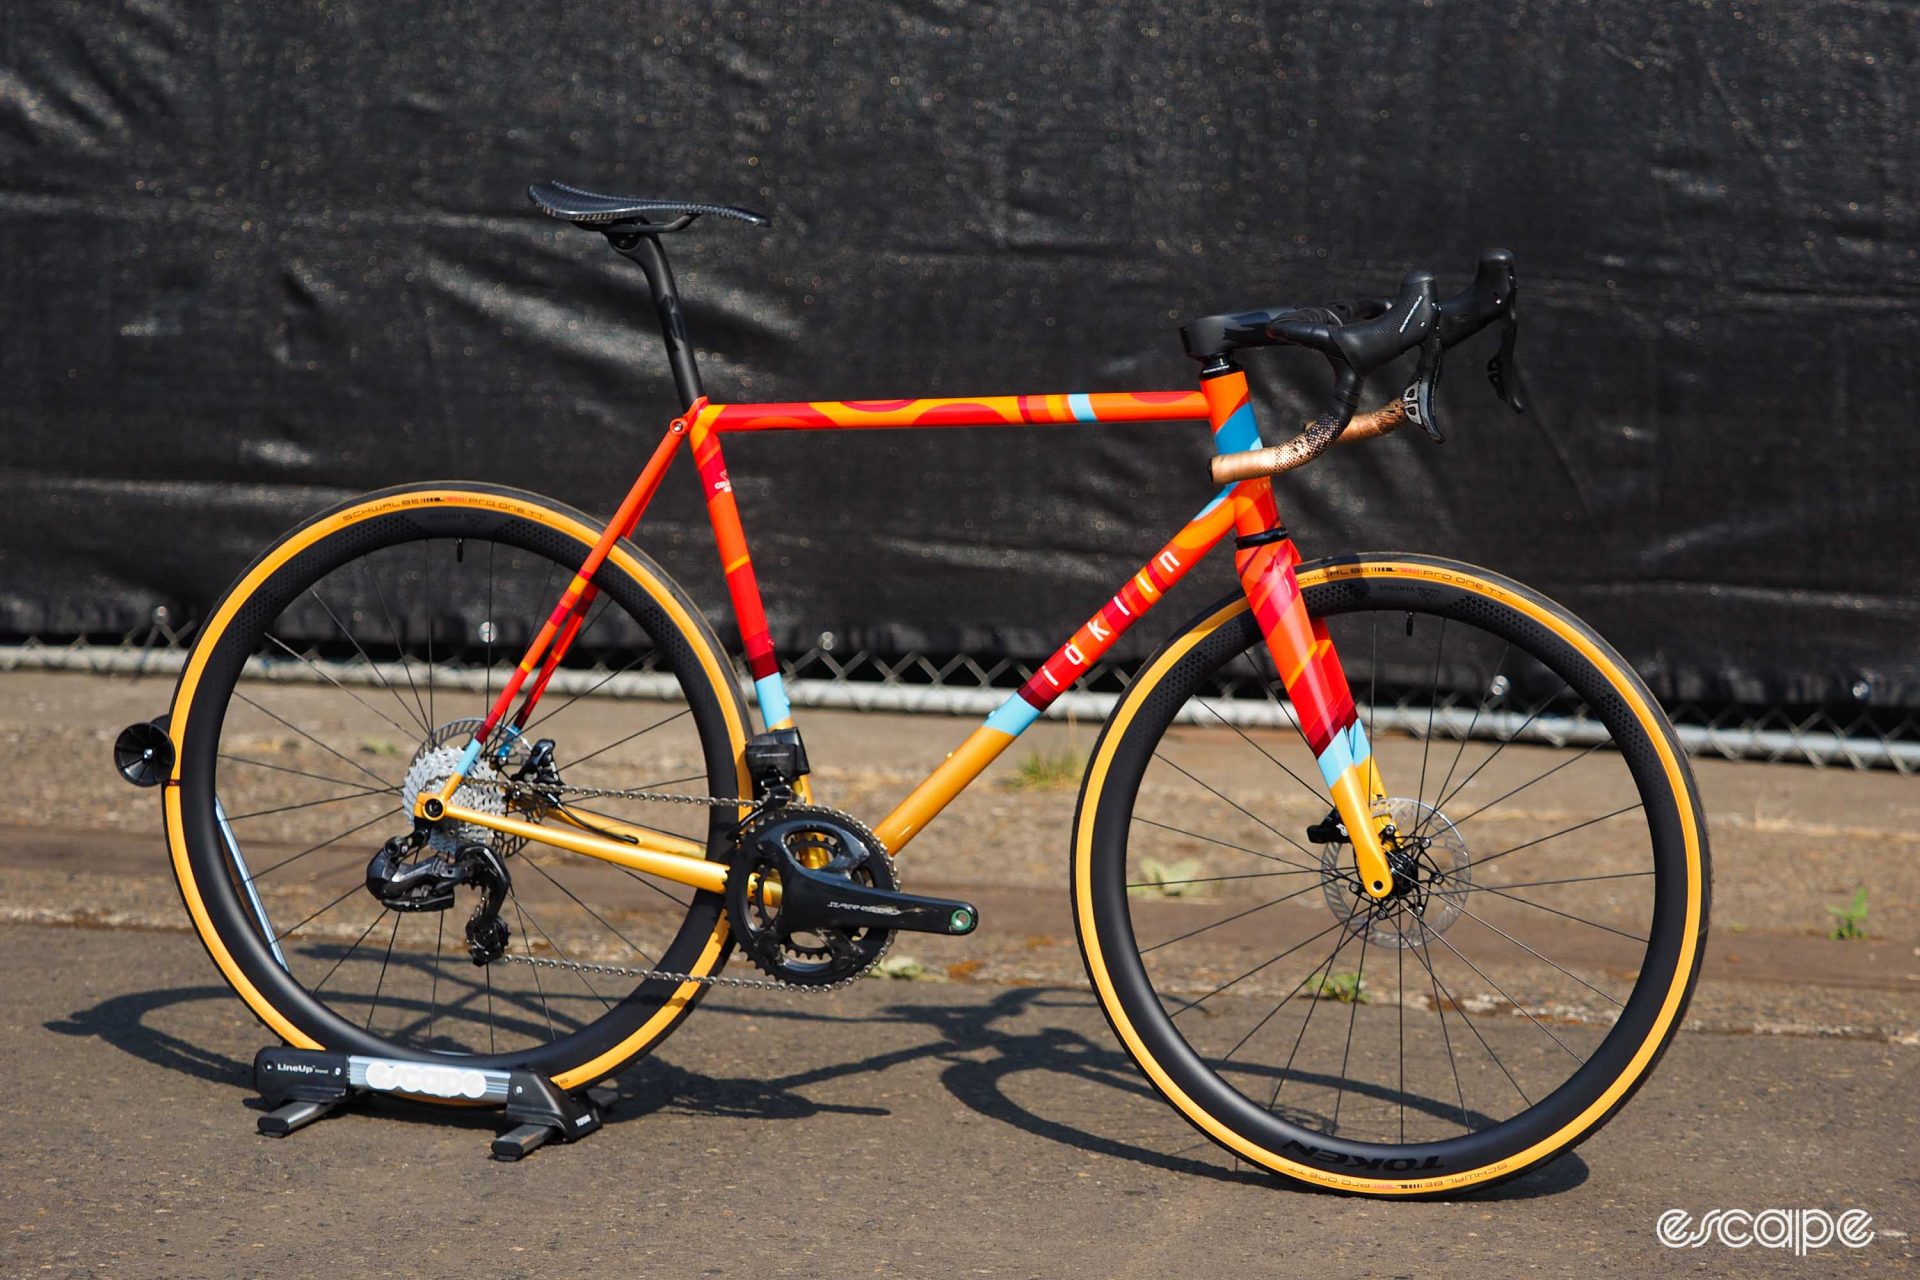 Profile image of Ioklin frameworks road bike, in vibrant colours.